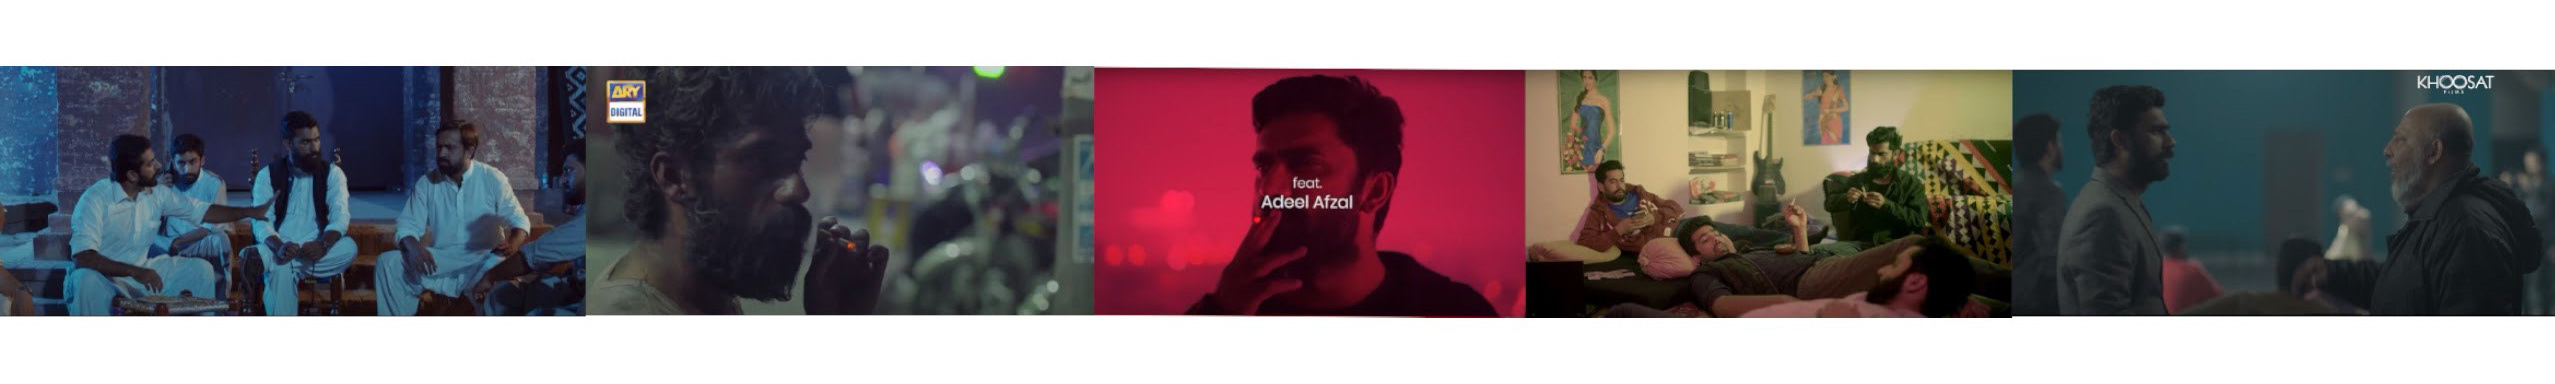 Banner del profilo di Adeel Afzal